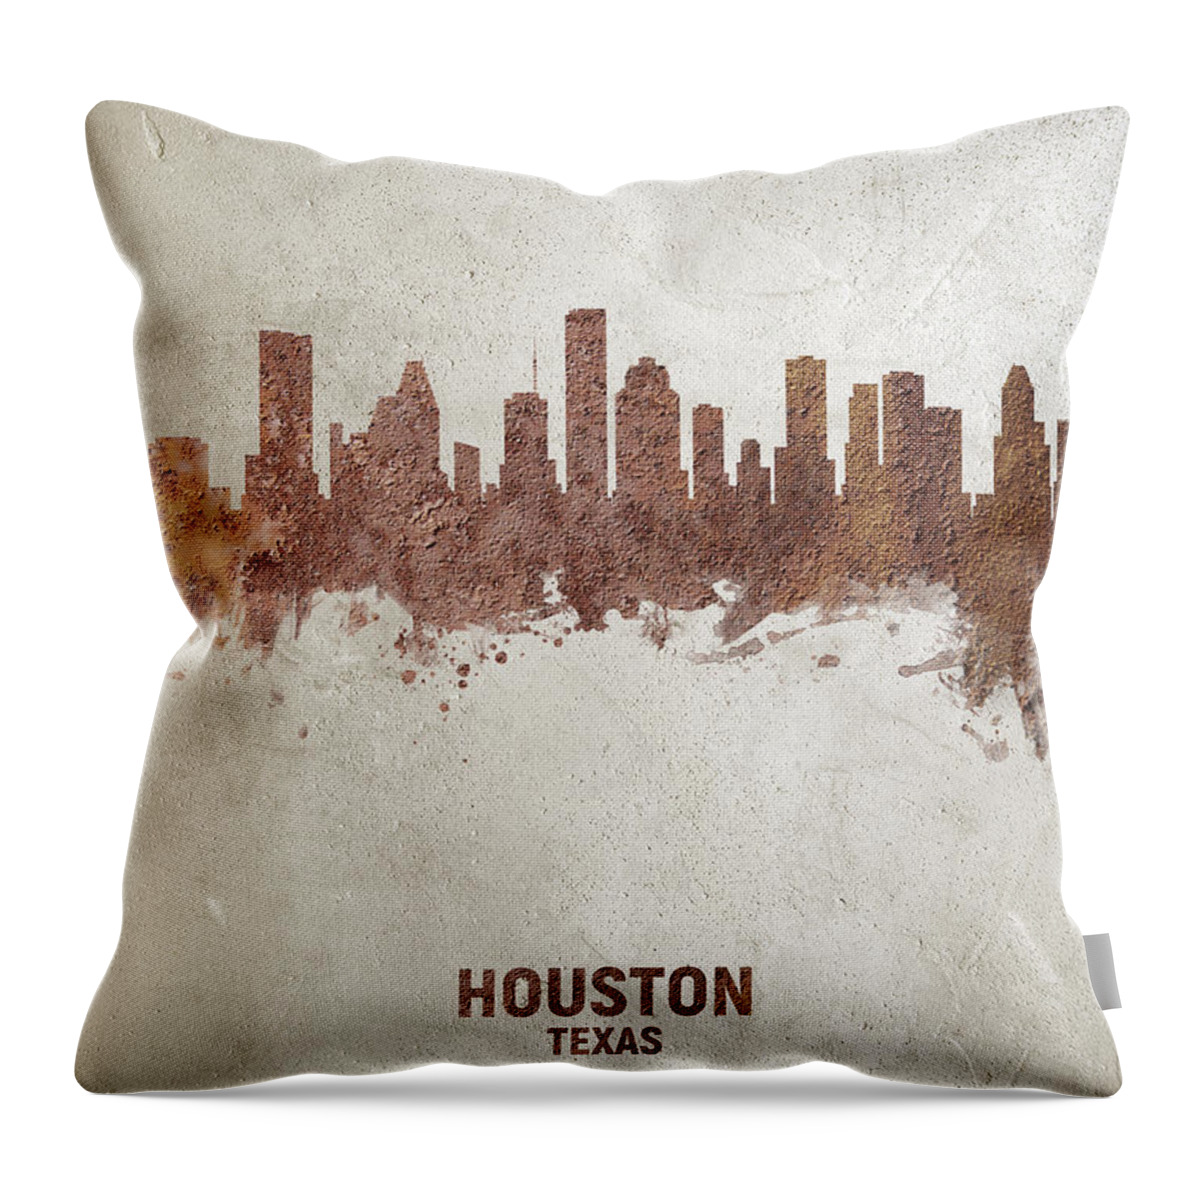 Houston Throw Pillow featuring the digital art Houston Texas Rust Skyline by Michael Tompsett